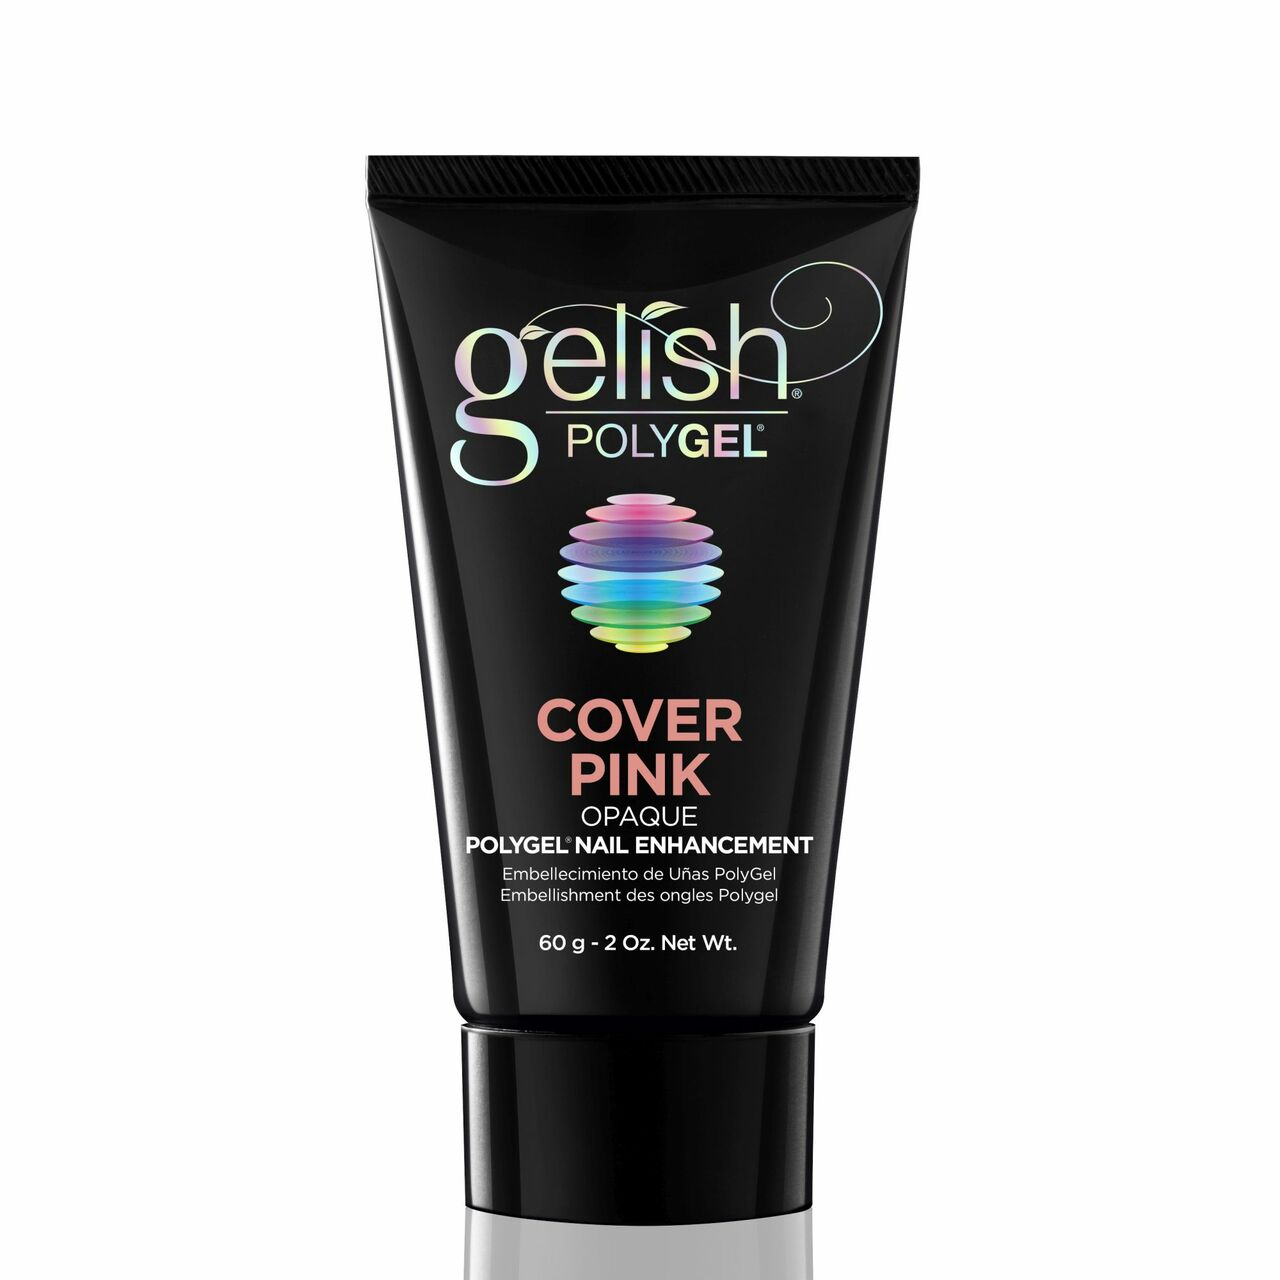 Gelish Polygel - Cover Pink 2 oz